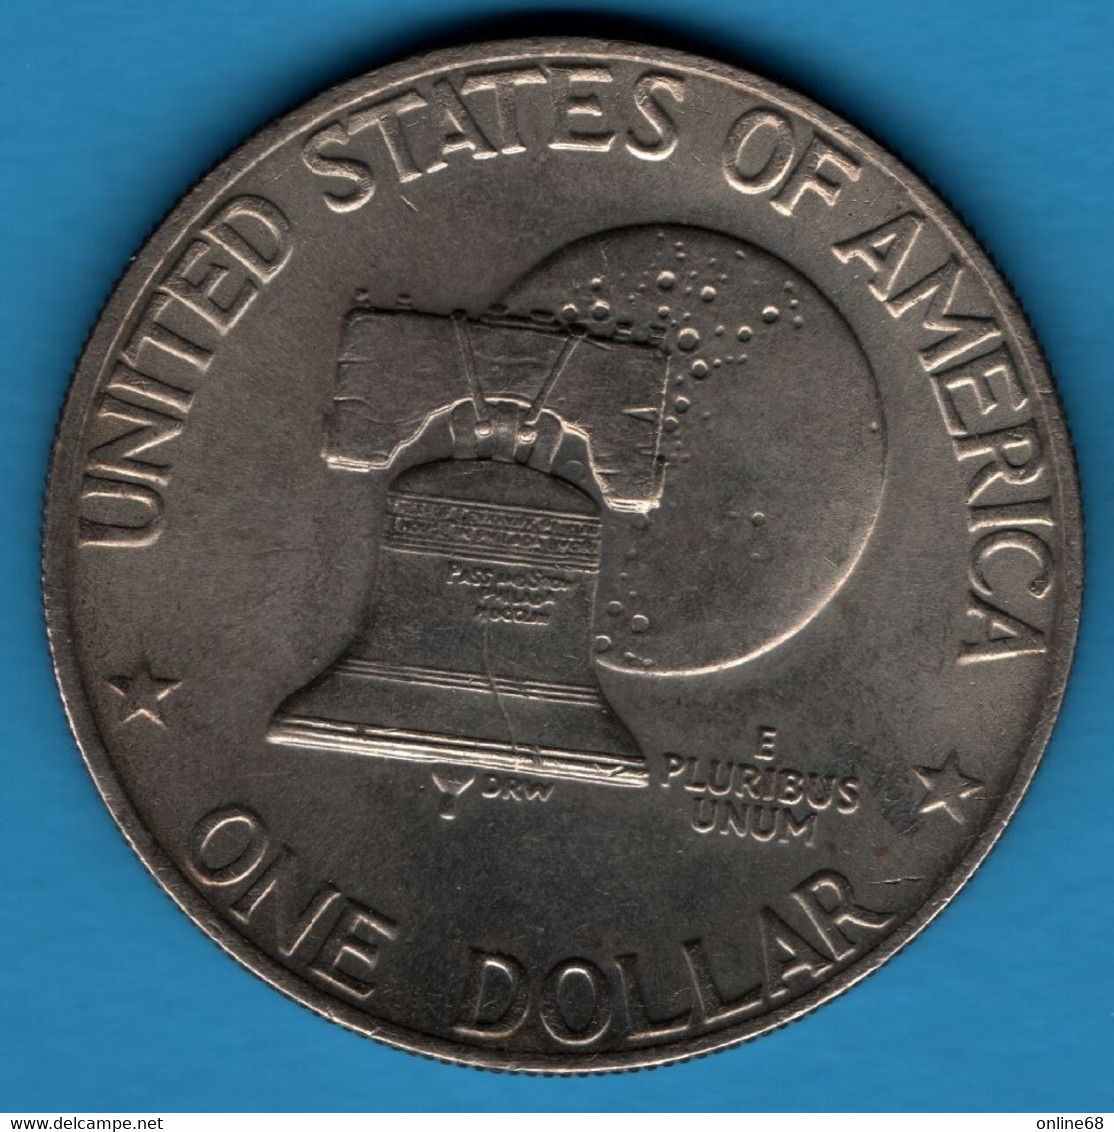 USA 1 Dollar 1776-1976 KM# 206 Eisenhower Bicentennial Dollar - Conmemorativas